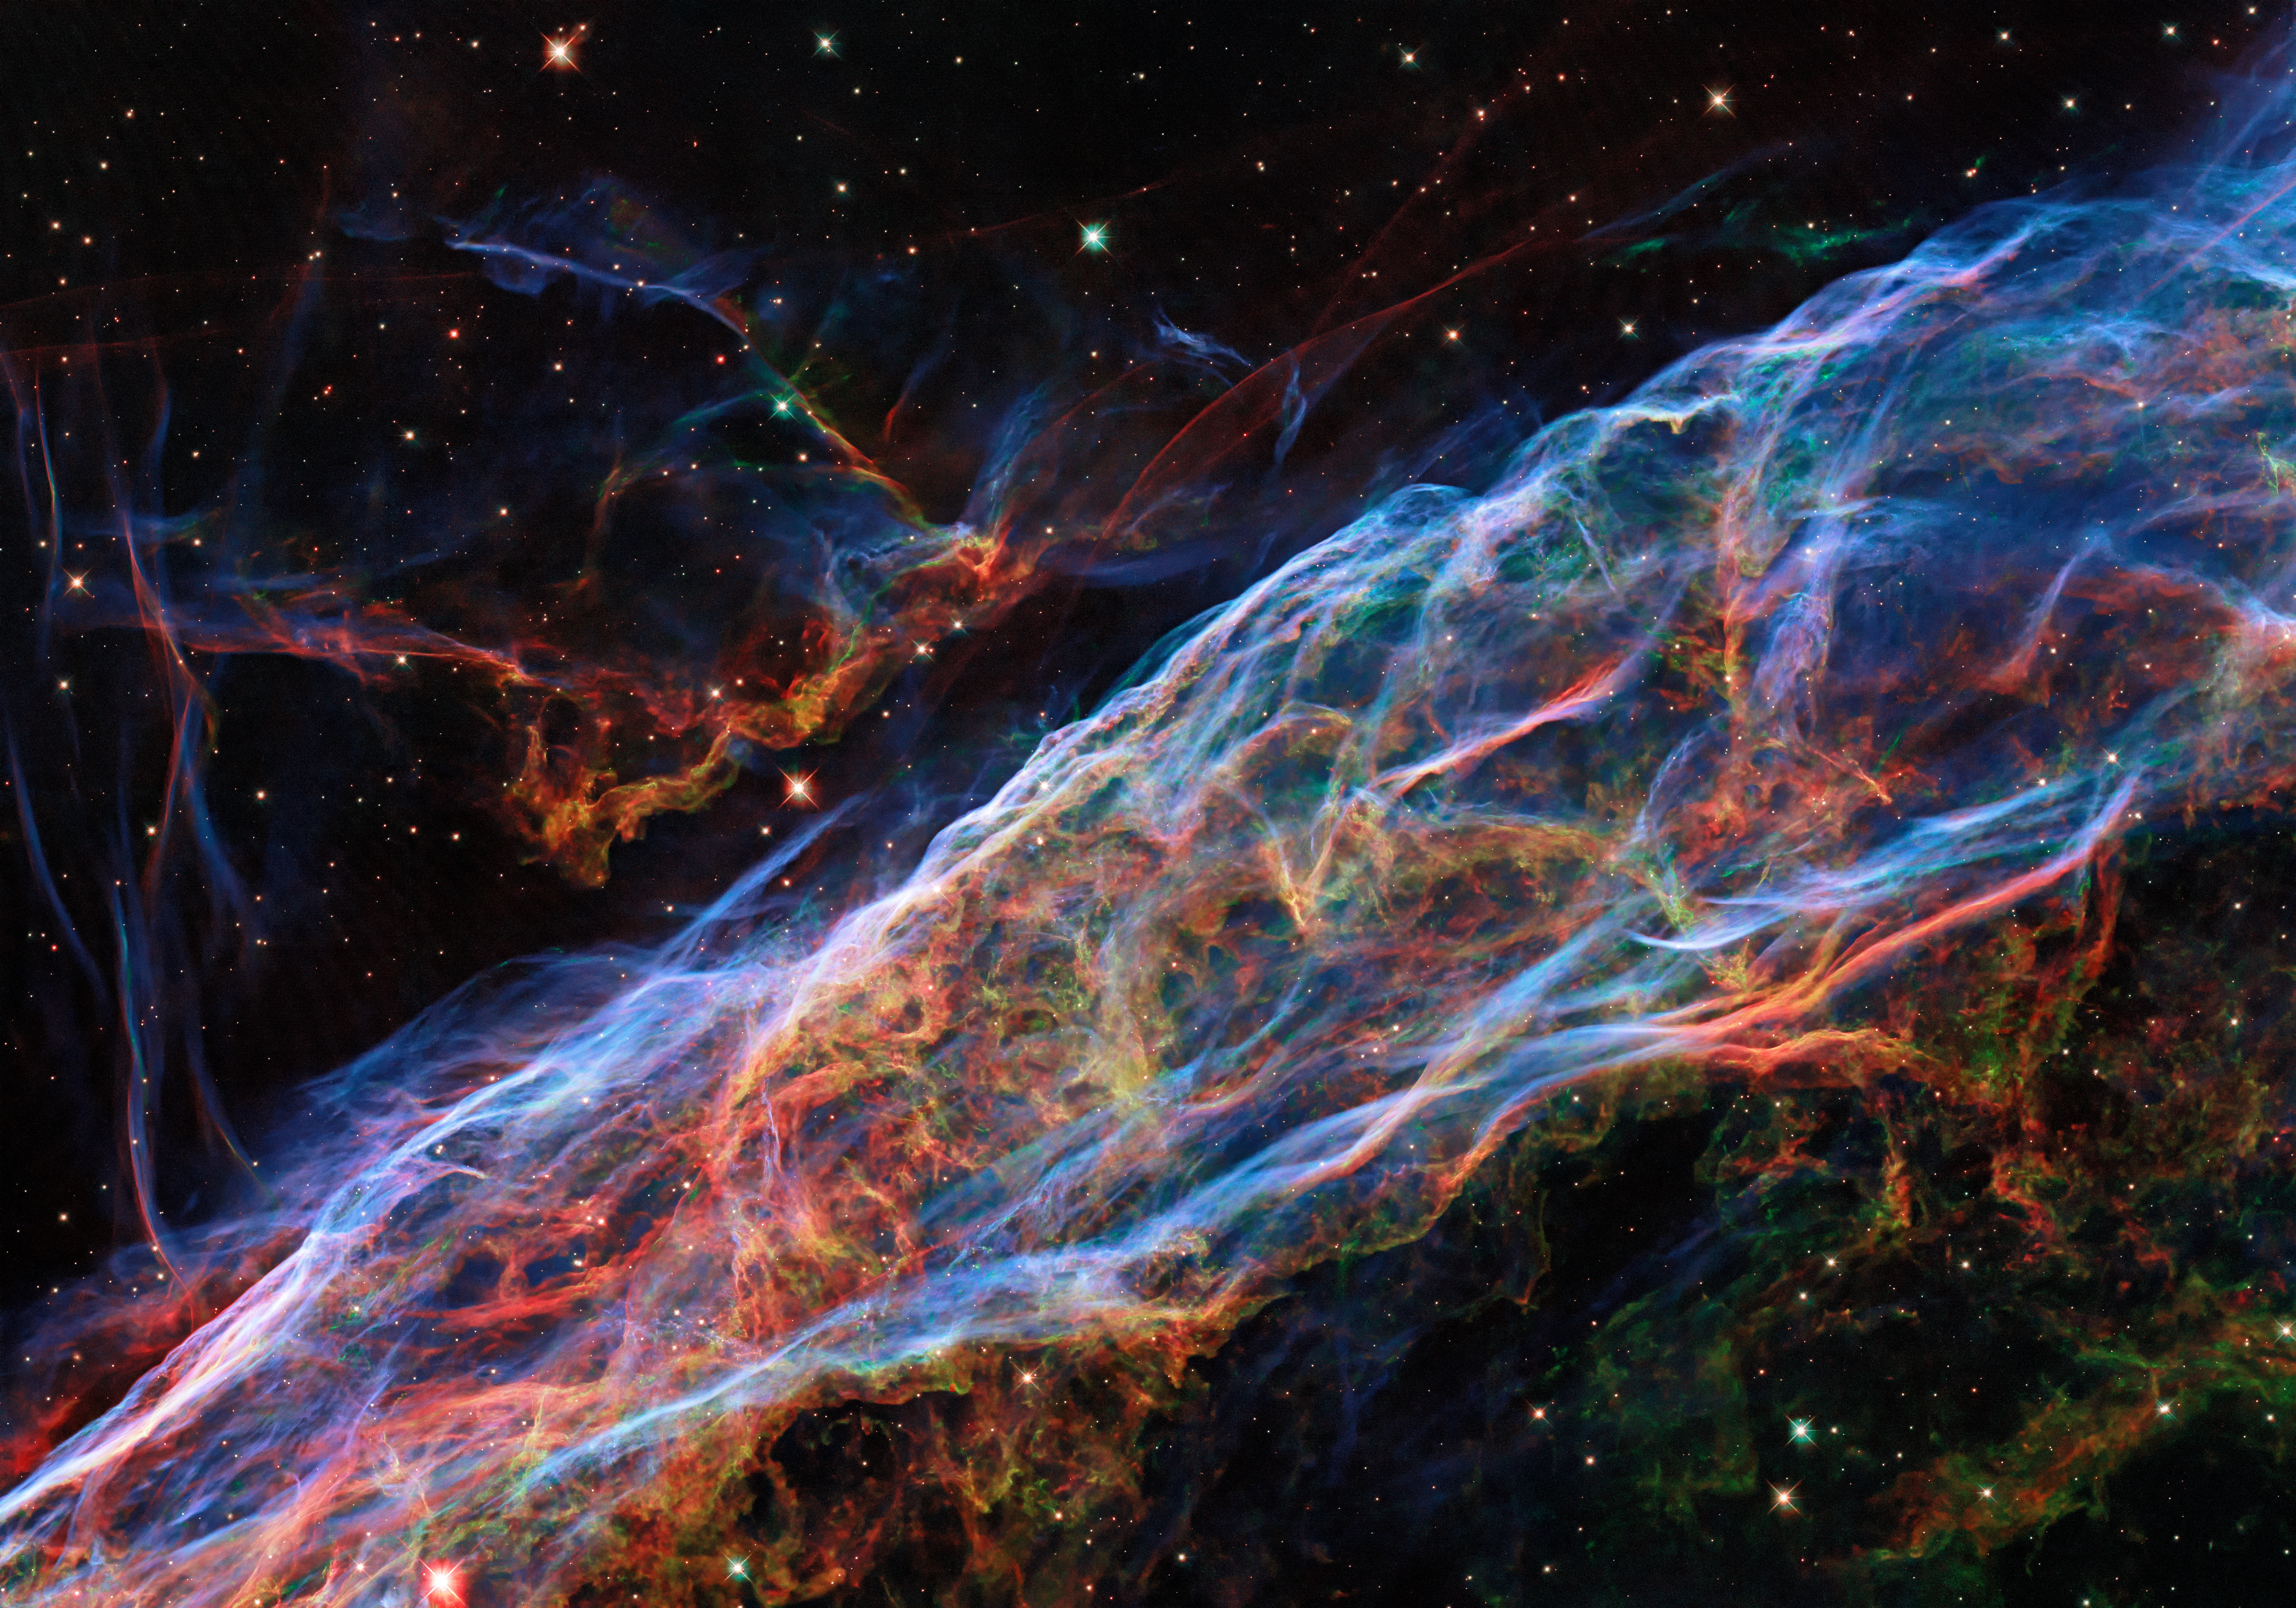 Hubble Revisits the Veil Nebula